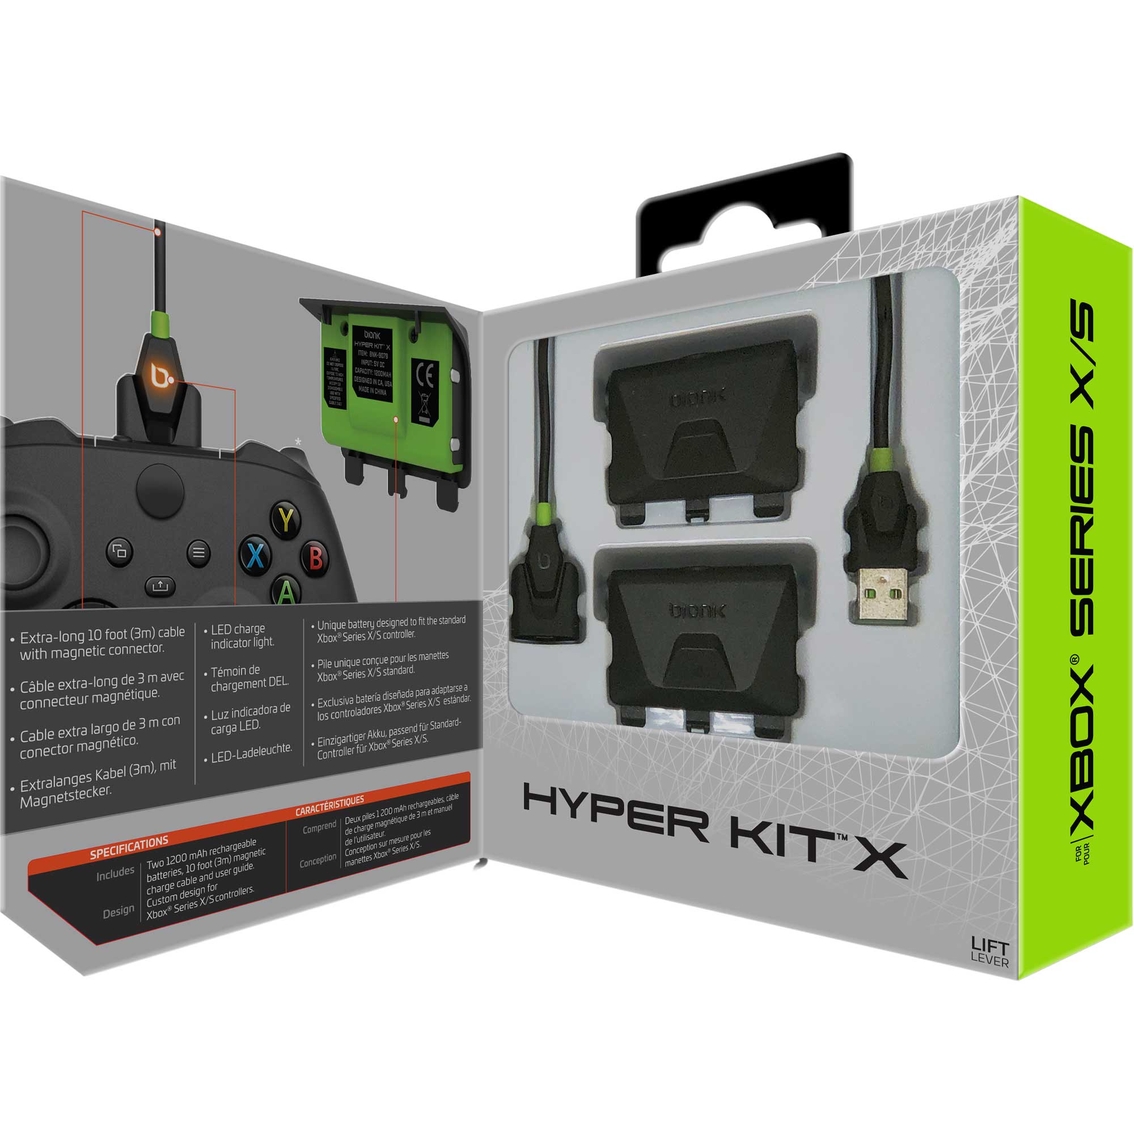 bionik Hyper Kit for Xbox Series S/X - Image 6 of 8